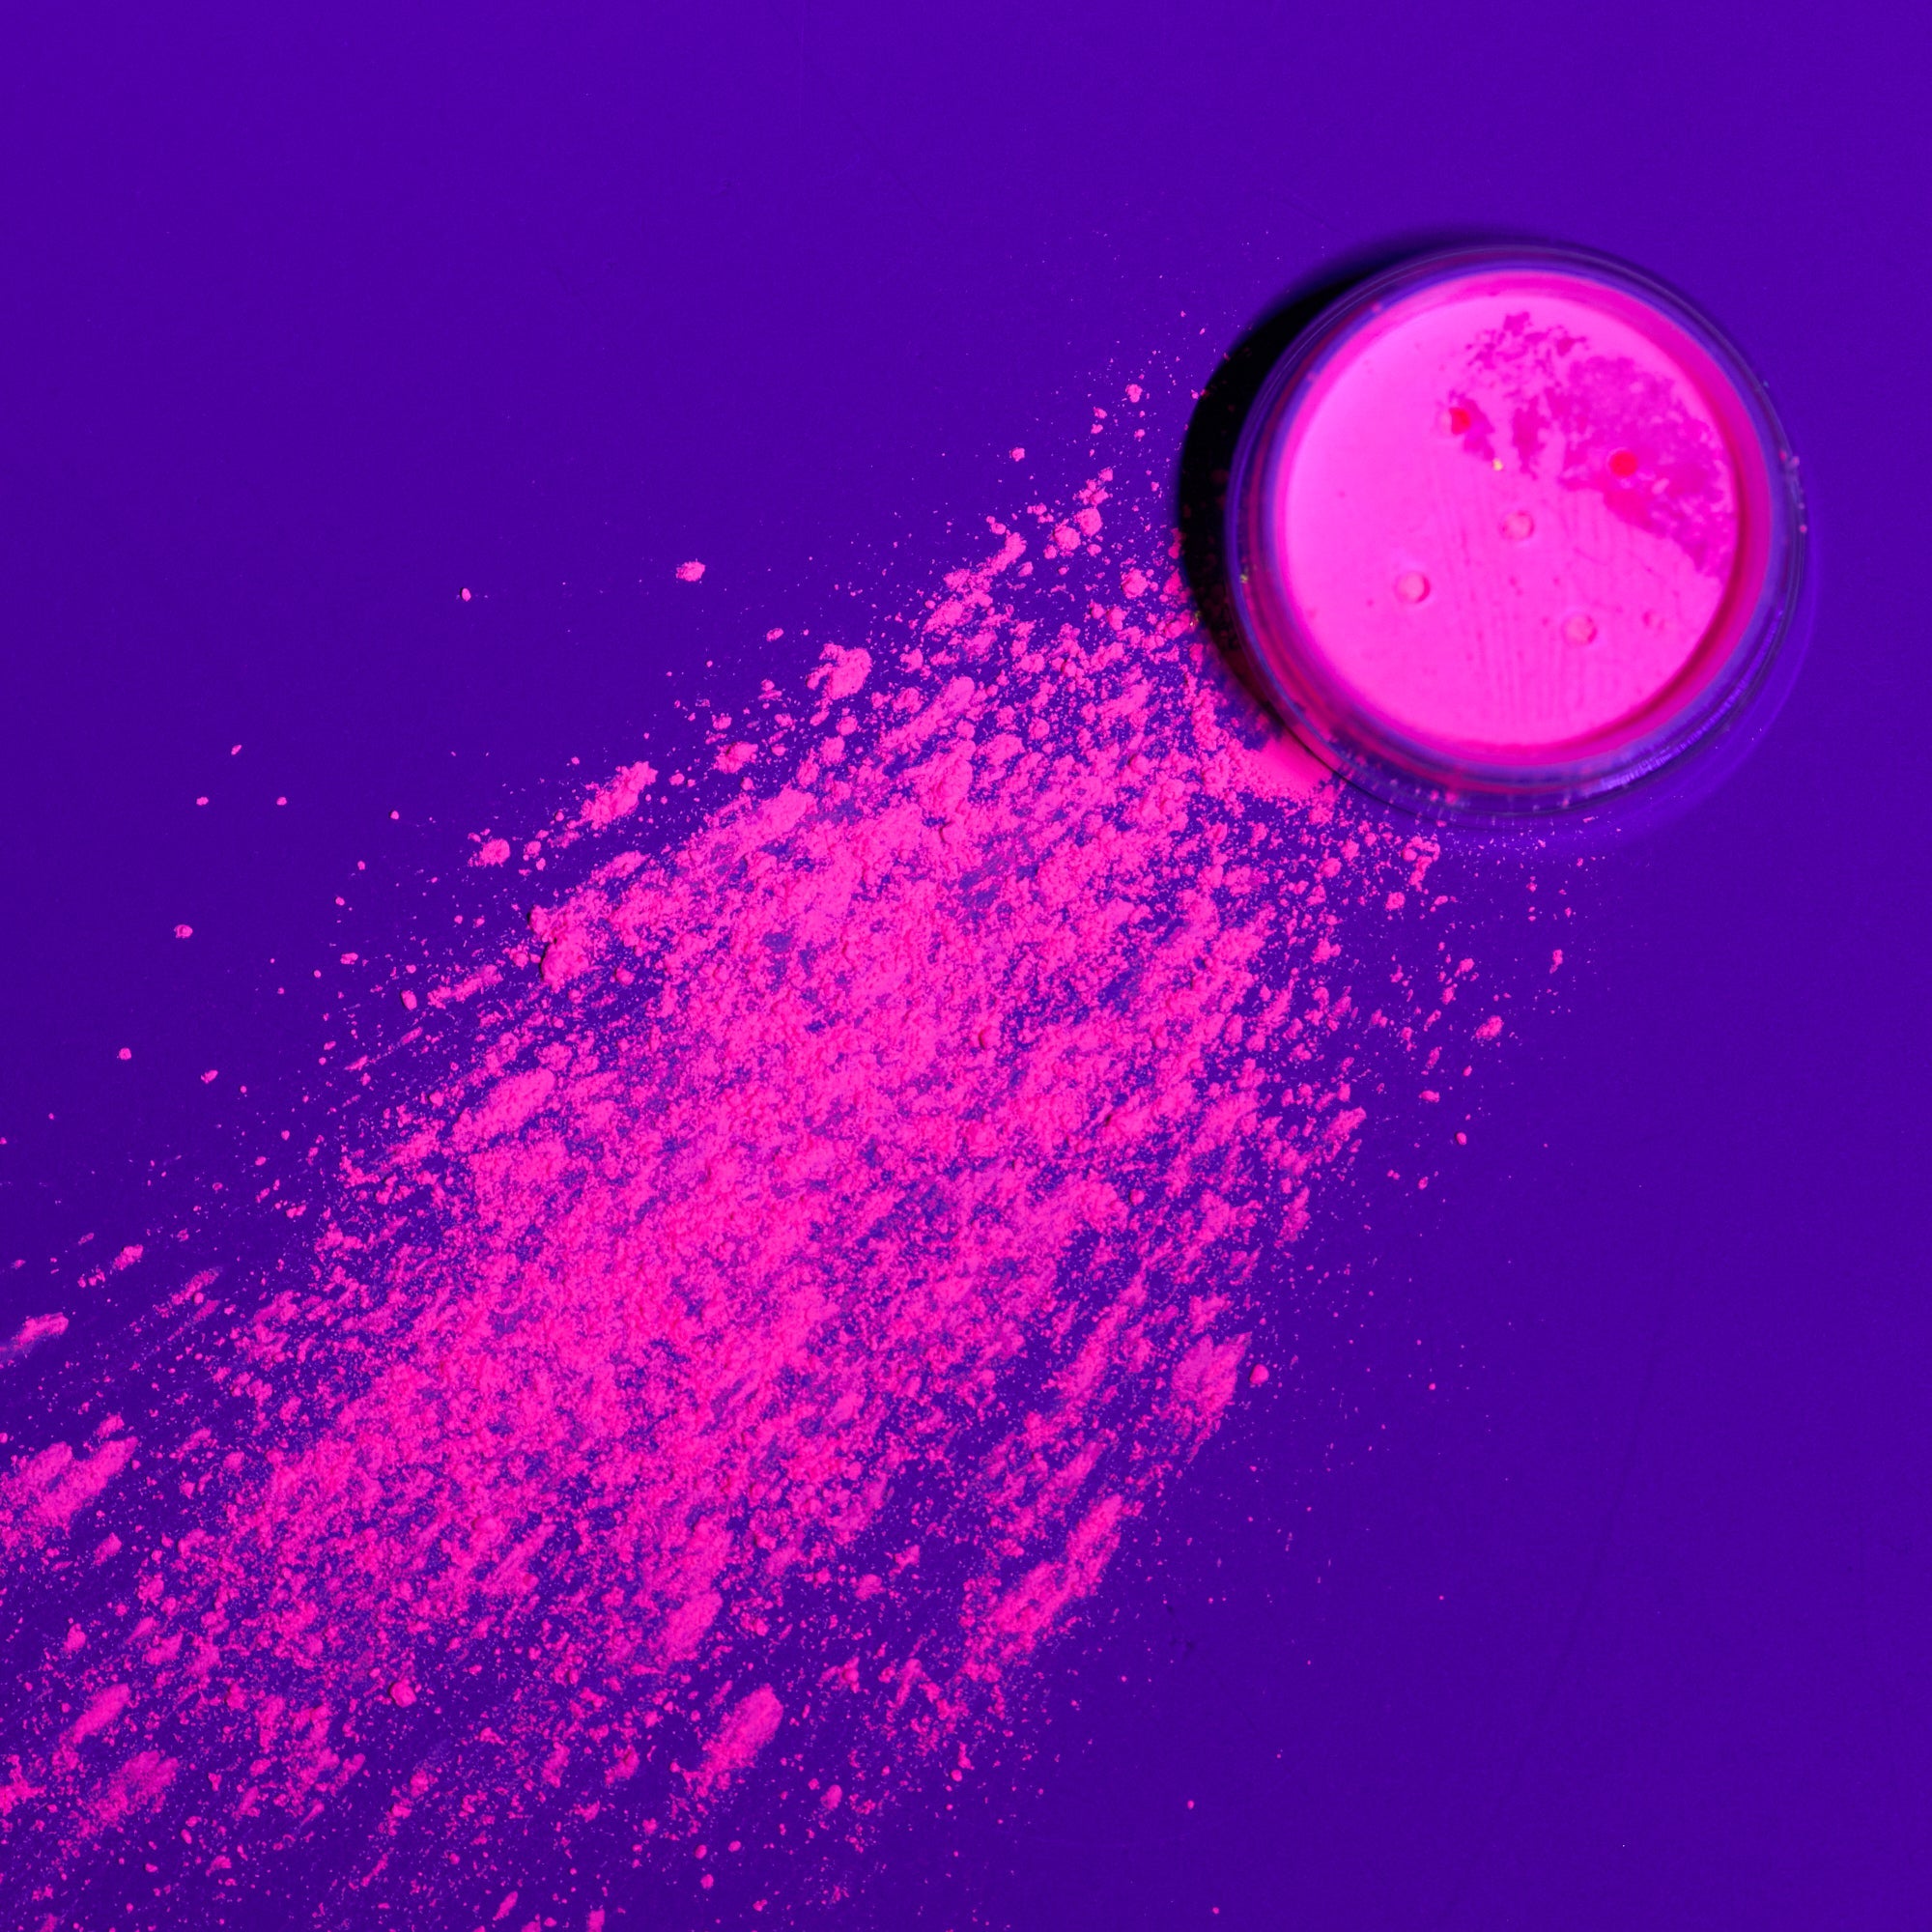 Neon UV Glow Blacklight Pigment Shaker. Cosmetically certified, FDA & Health Canada compliant, cruelty free and vegan.